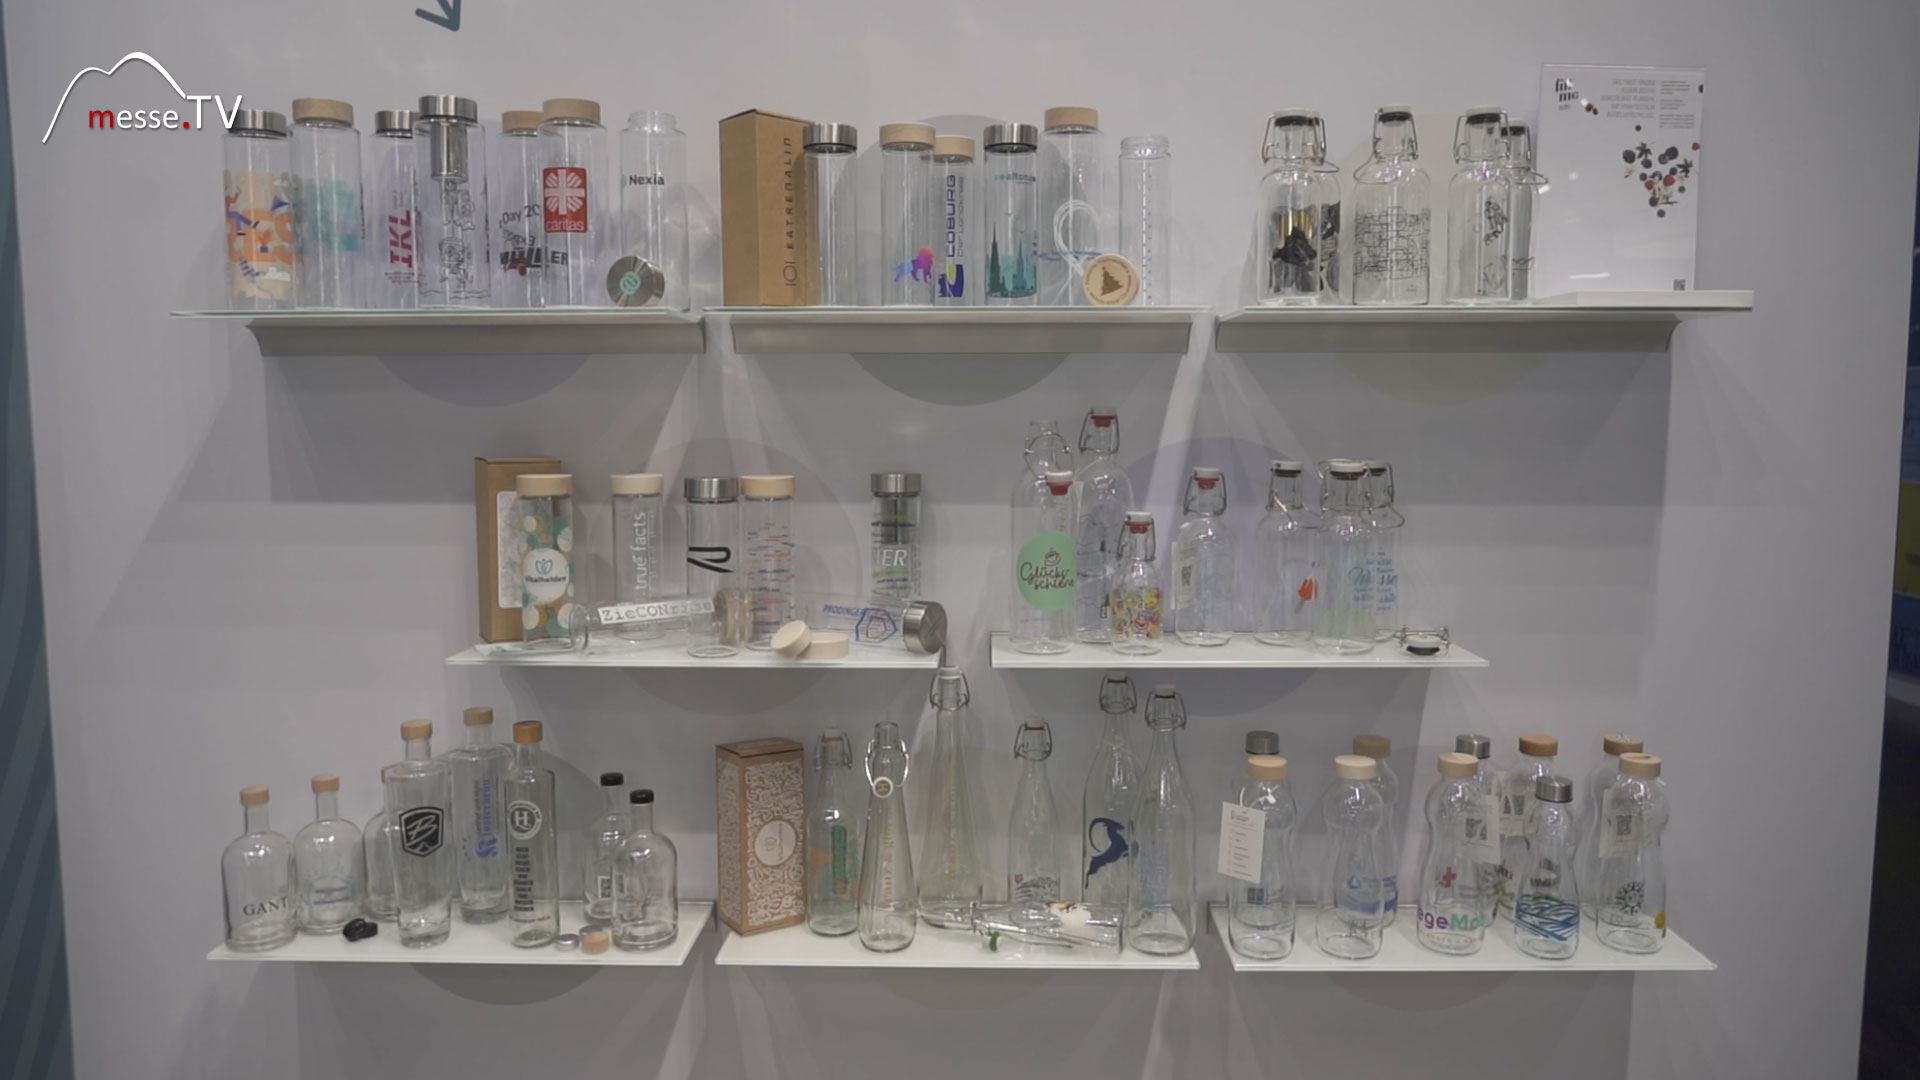 FLASCHENFREUNDE personalized glass bottles BrauBeviale 2023